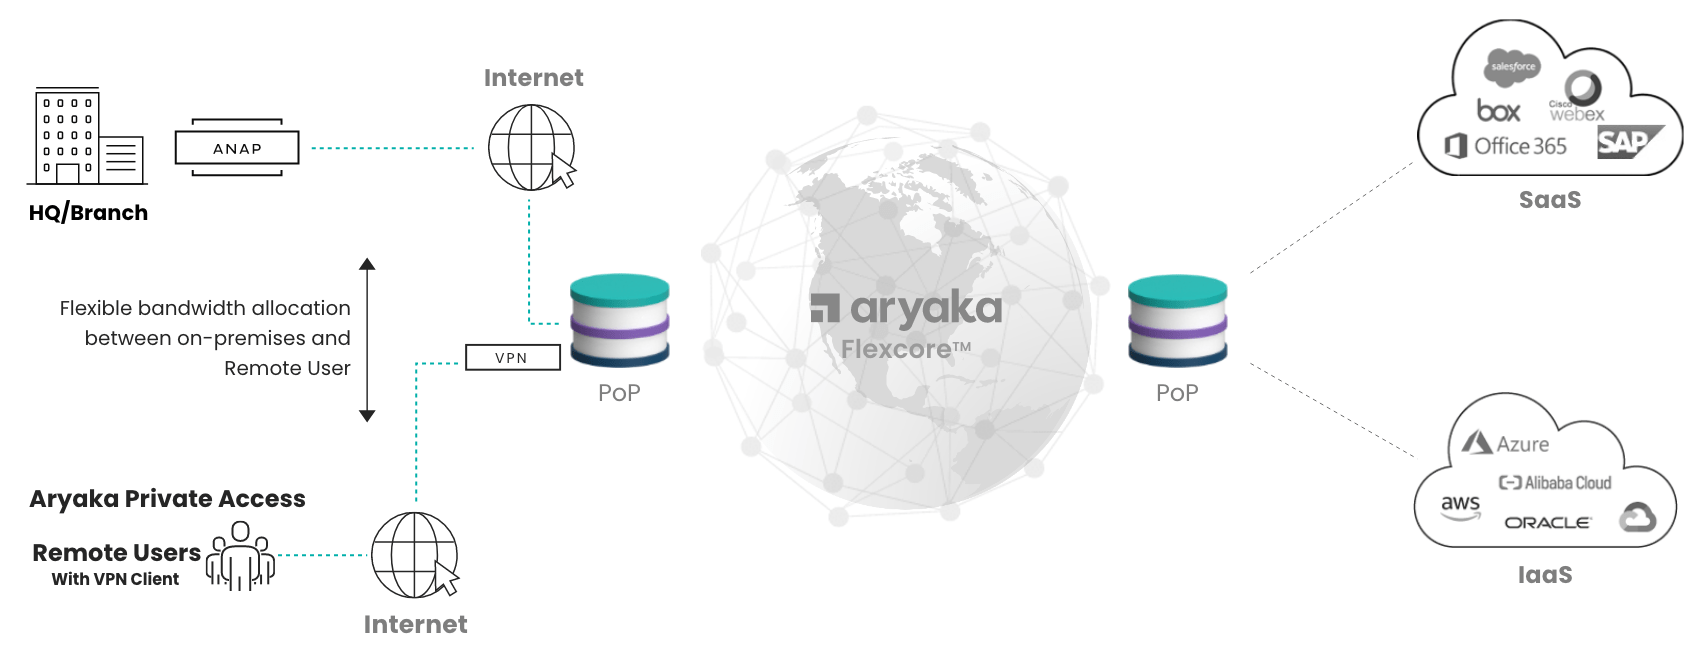 Aryaka’s hybrid workplace solution